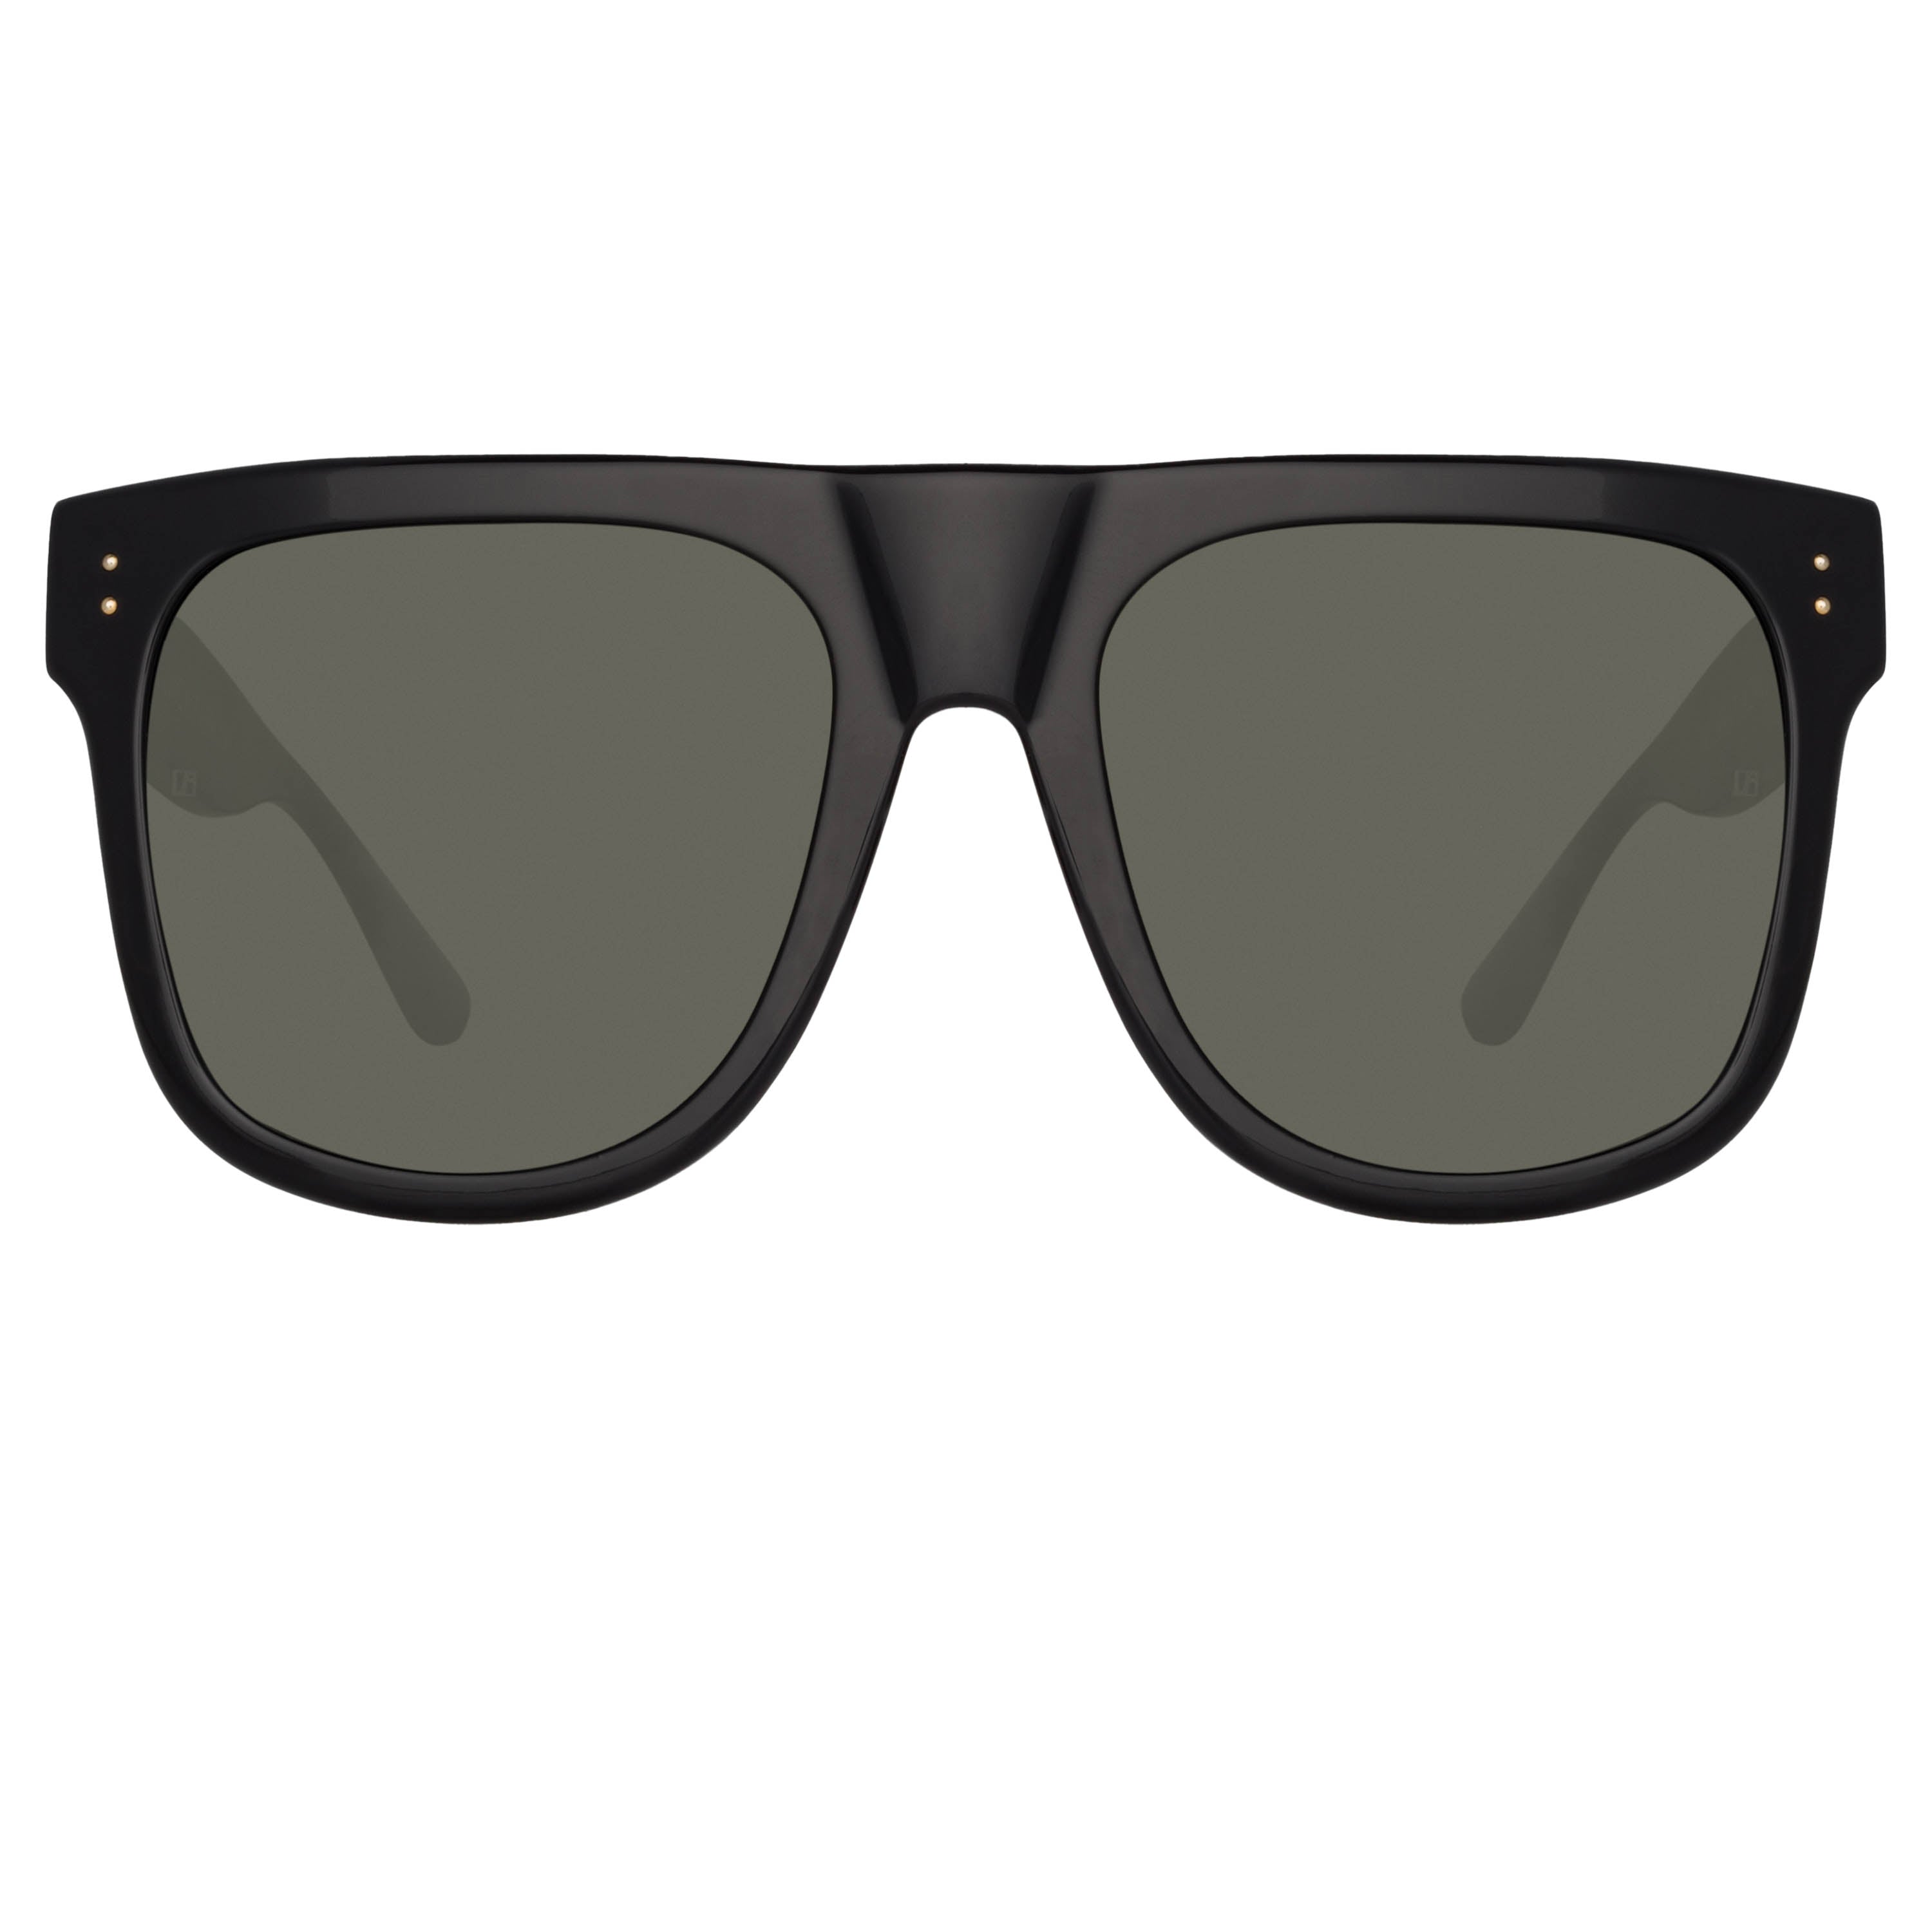 Carolina Flat Top Sunglasses in Black (Men’s)